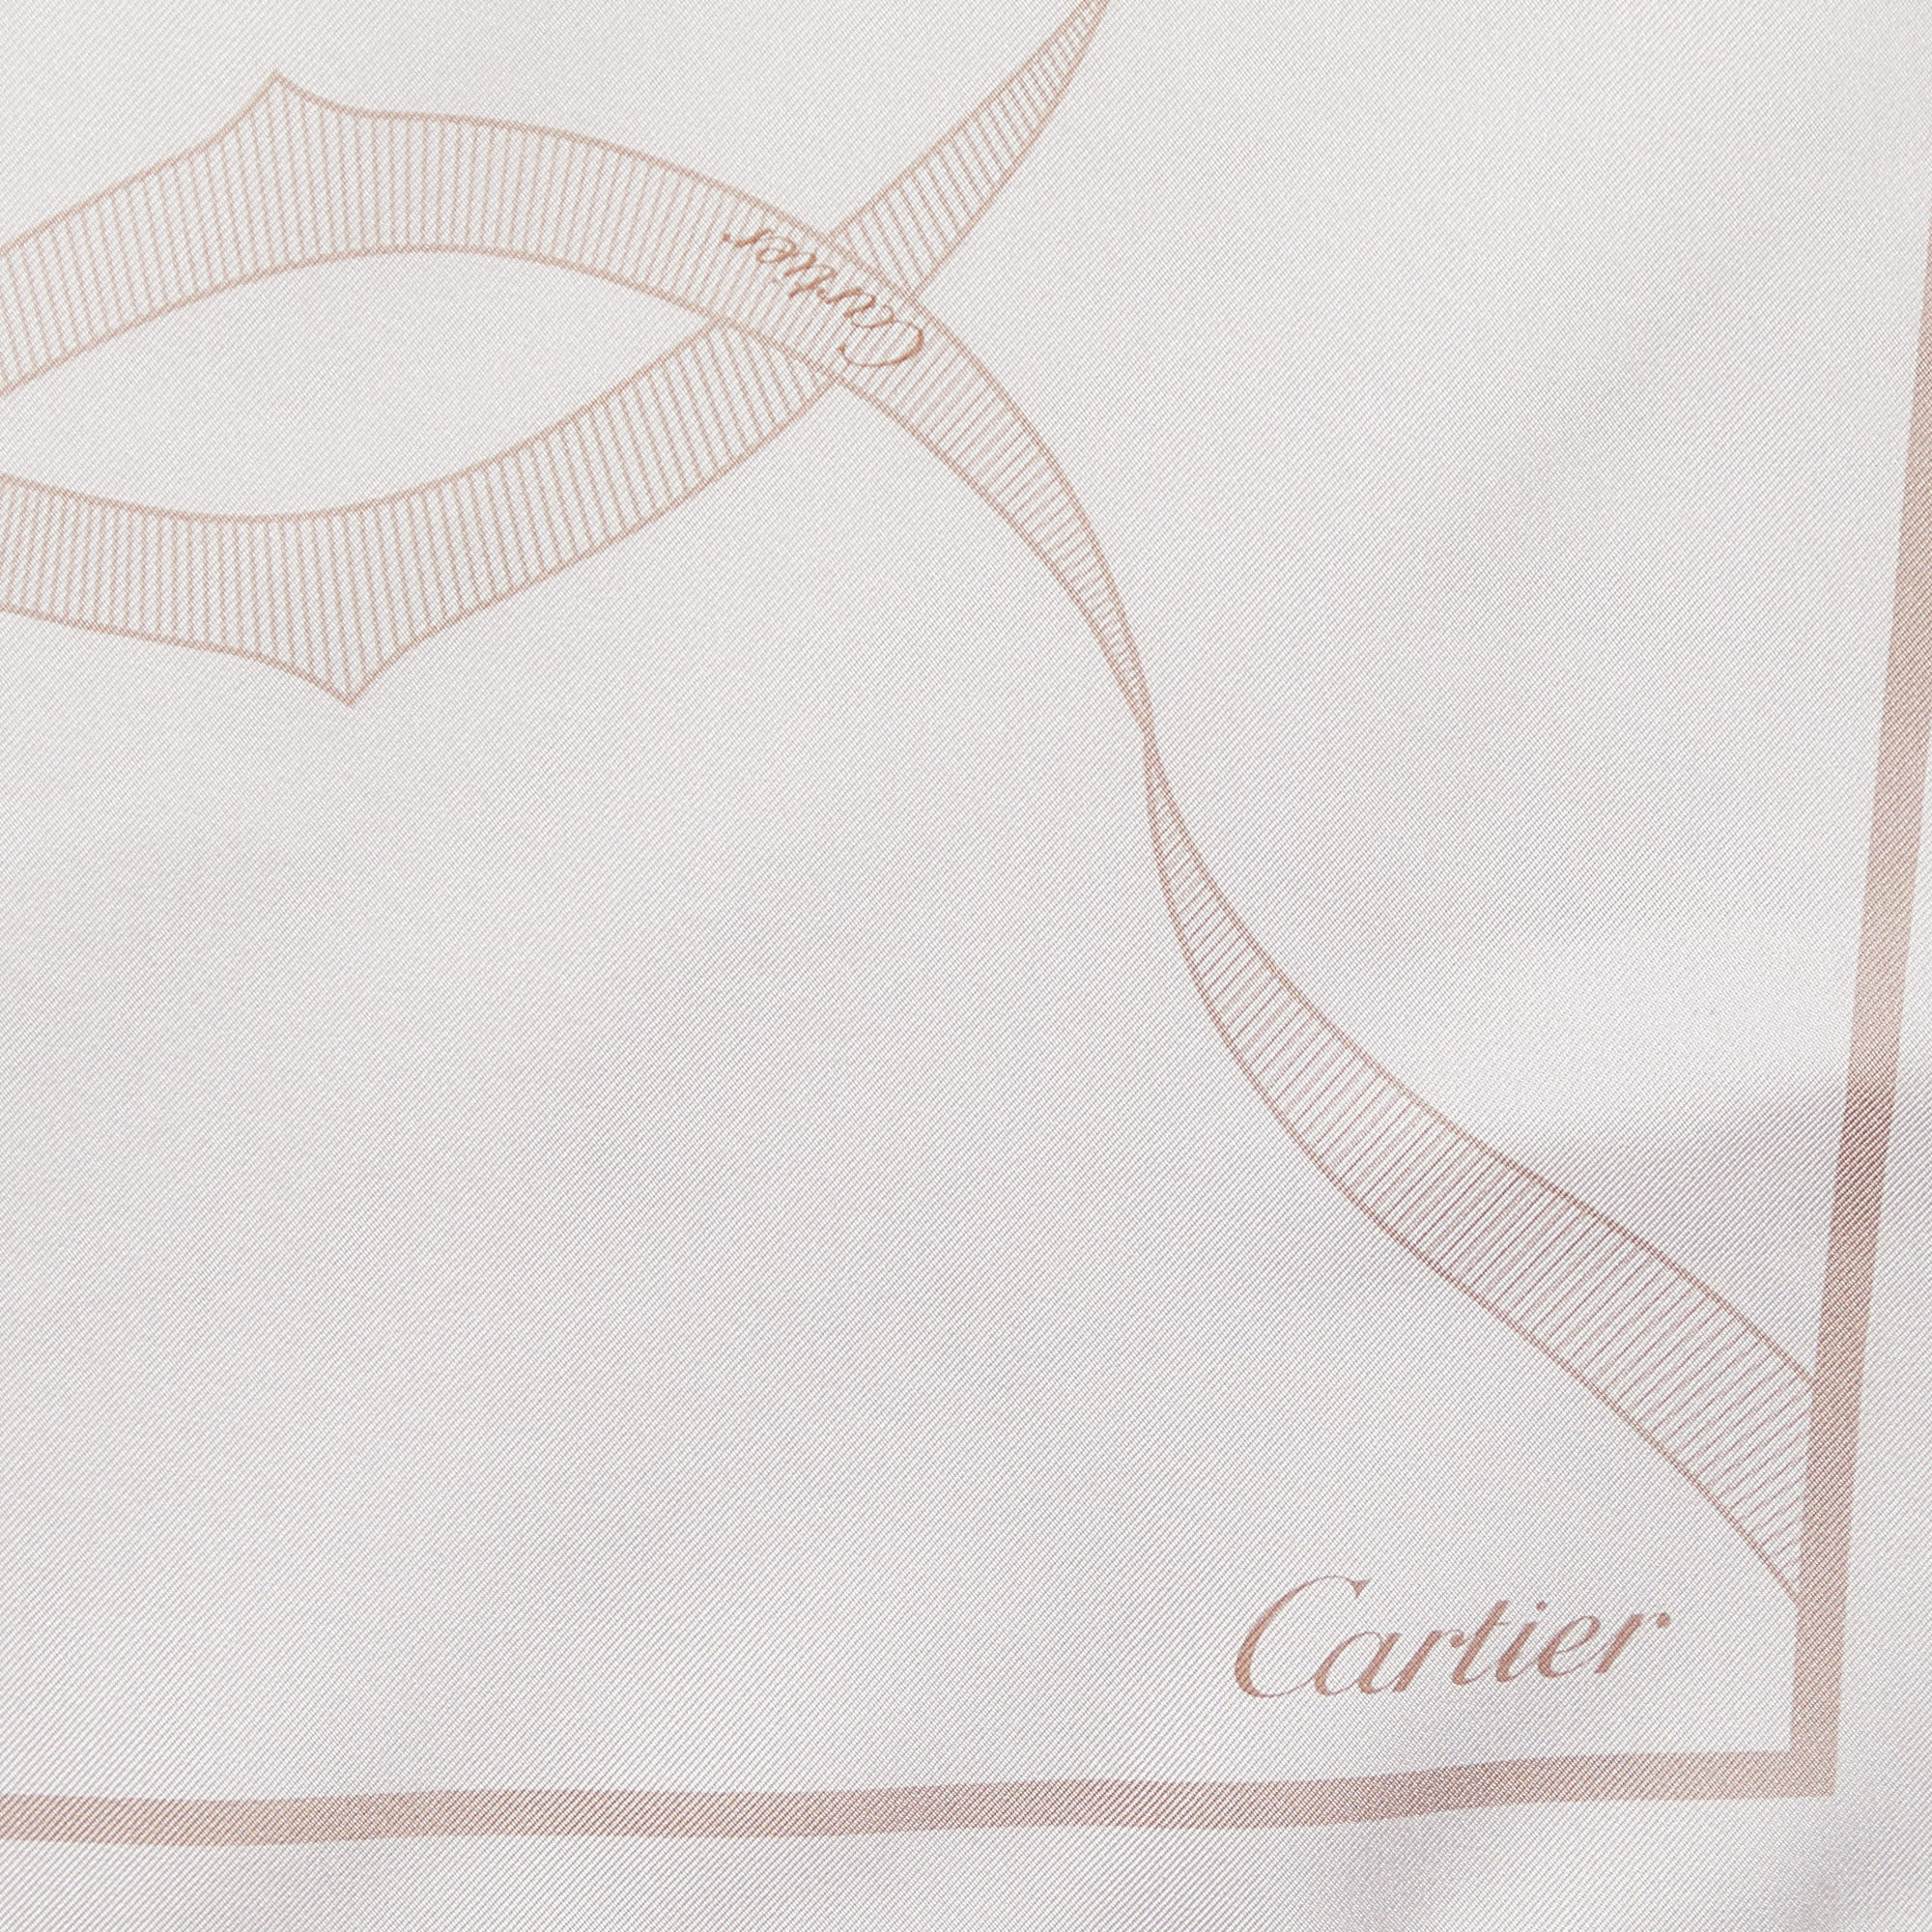 Cartier Pale Pink Print Silk Scarf